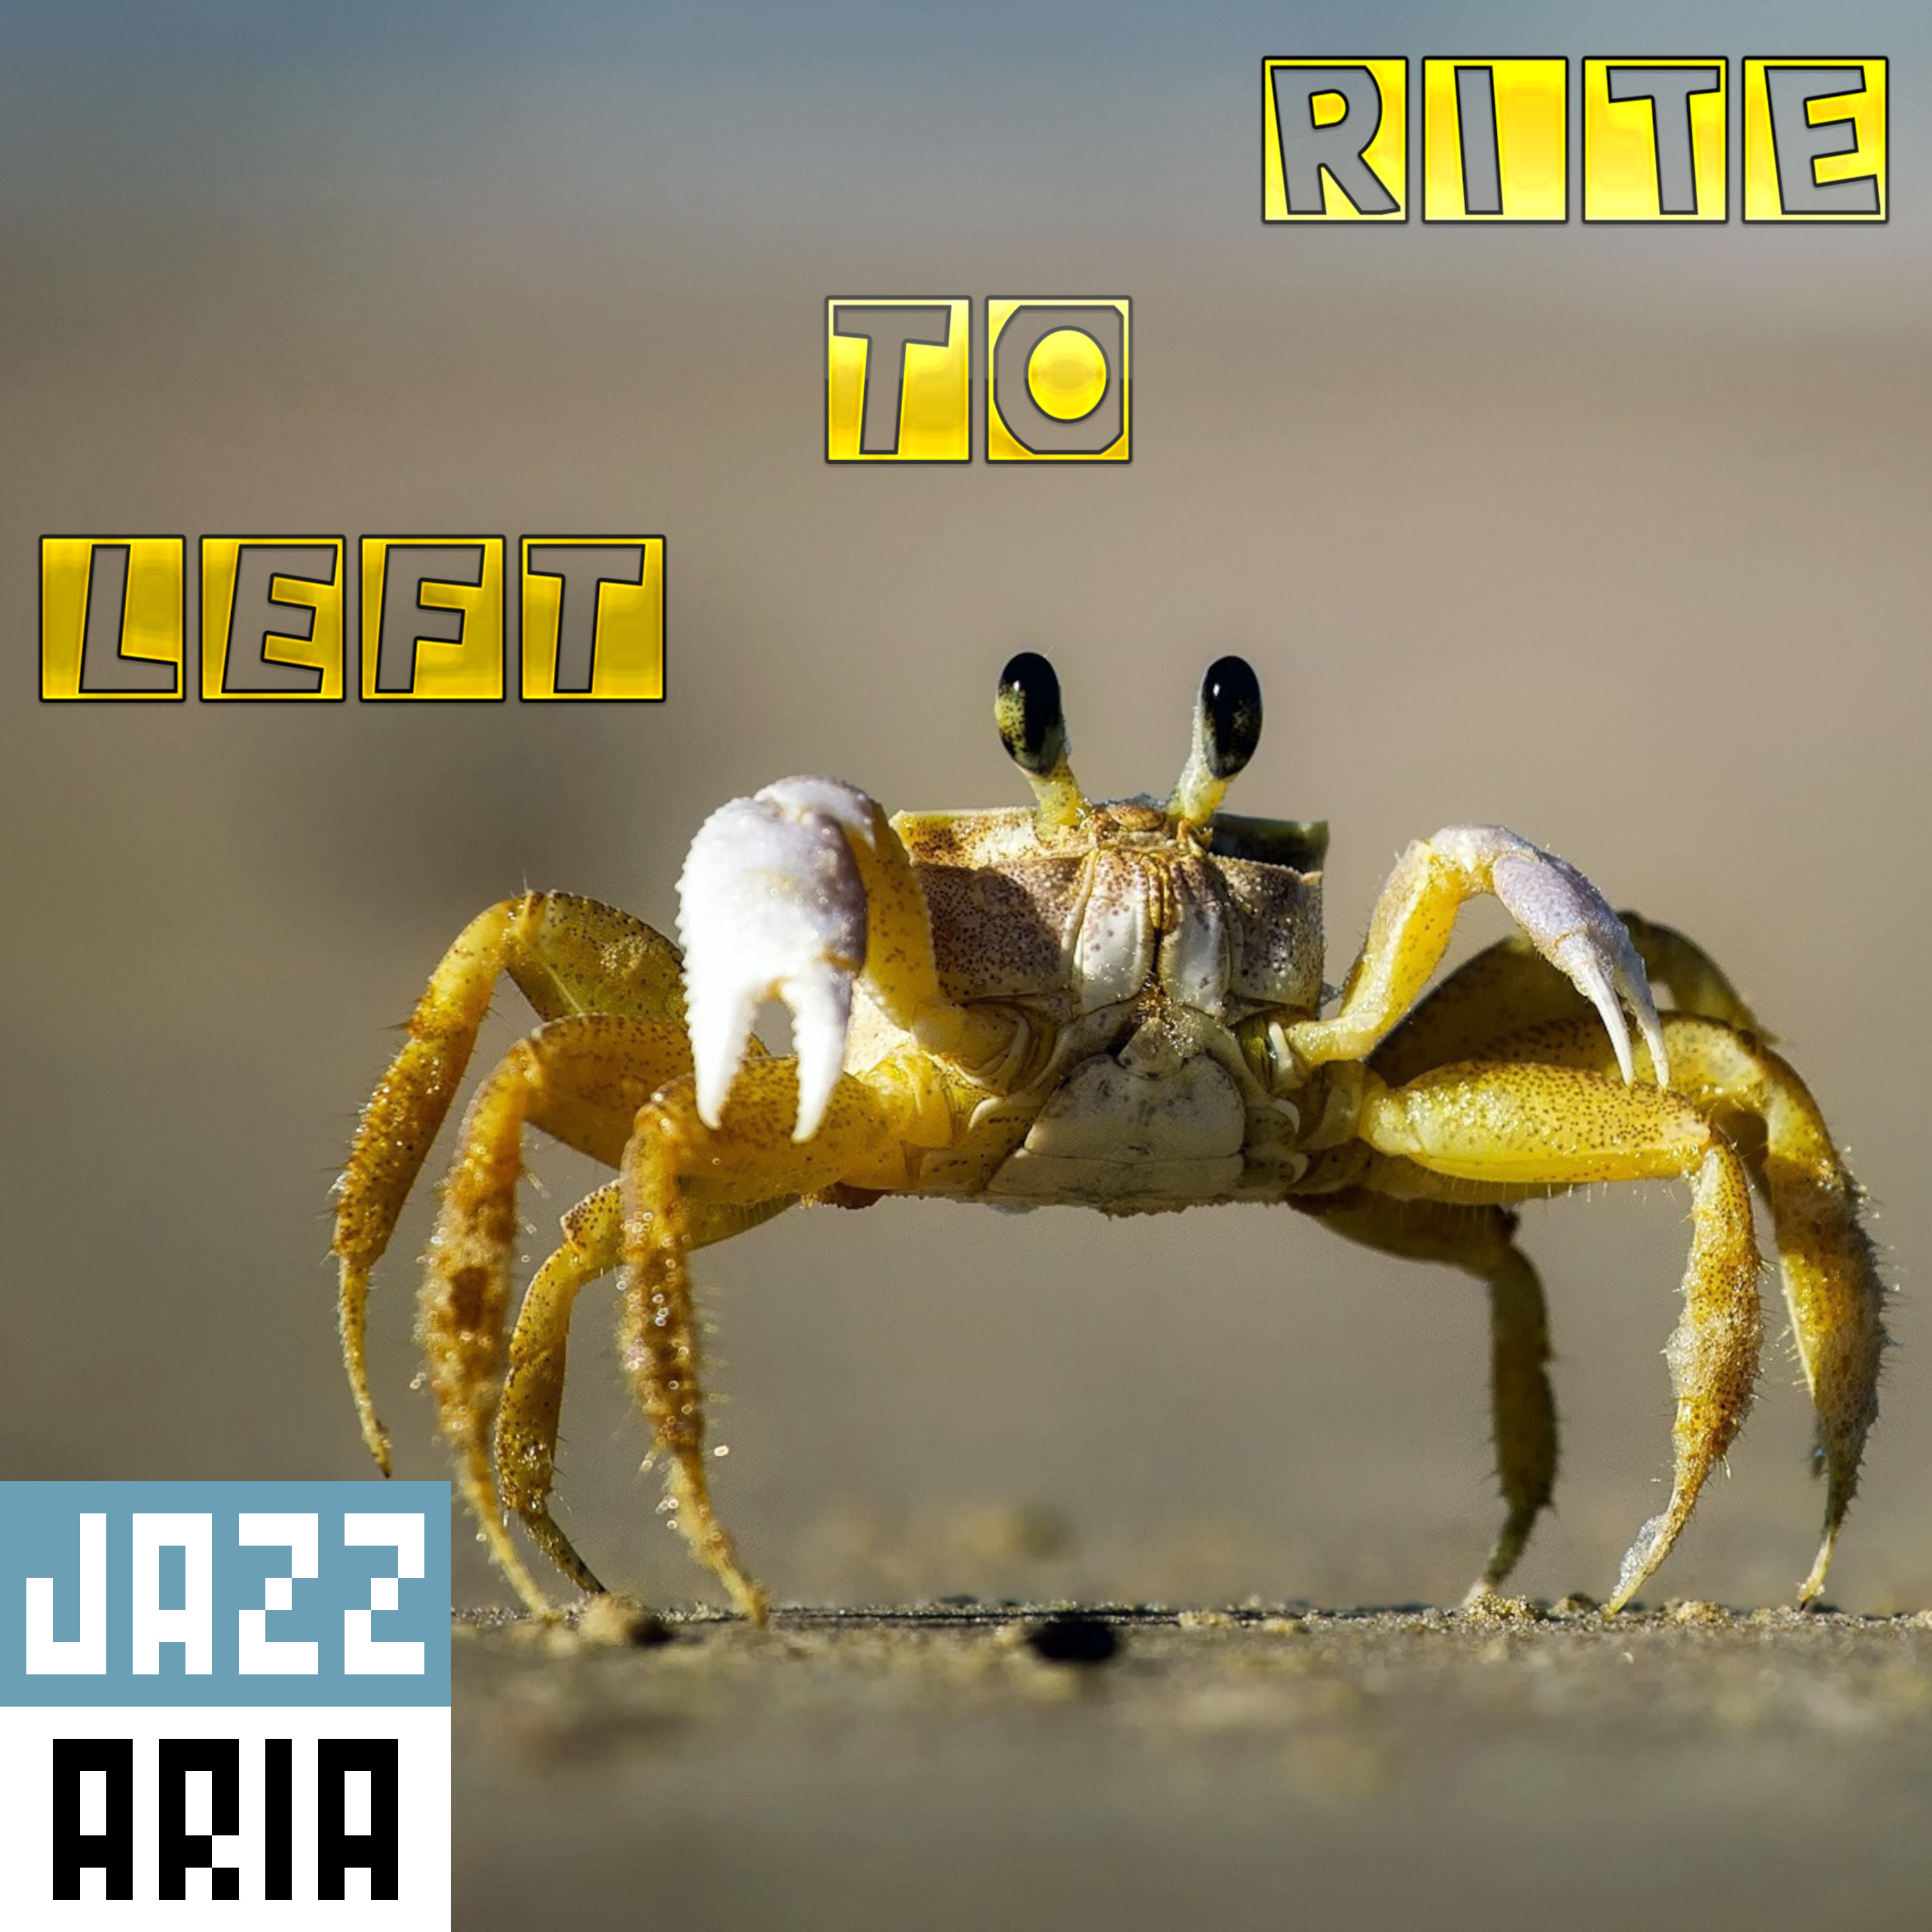 Jazzaria – Rite to Left